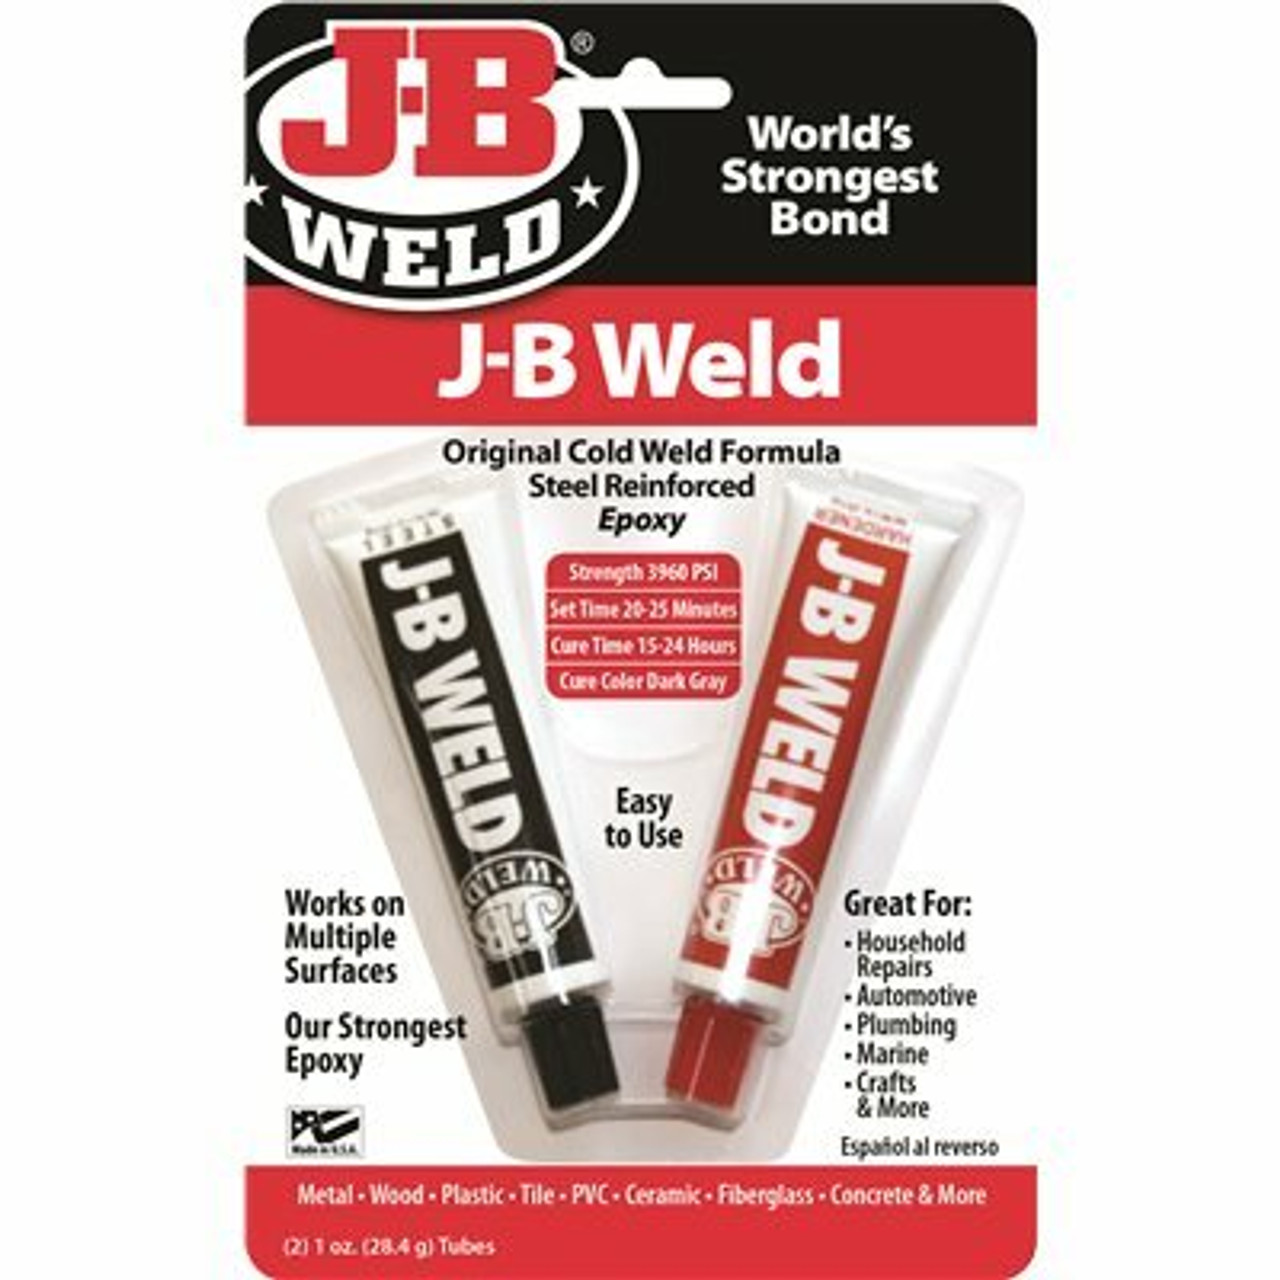 J-B Weld Two 1 Oz. Twin Tube Cold Weld